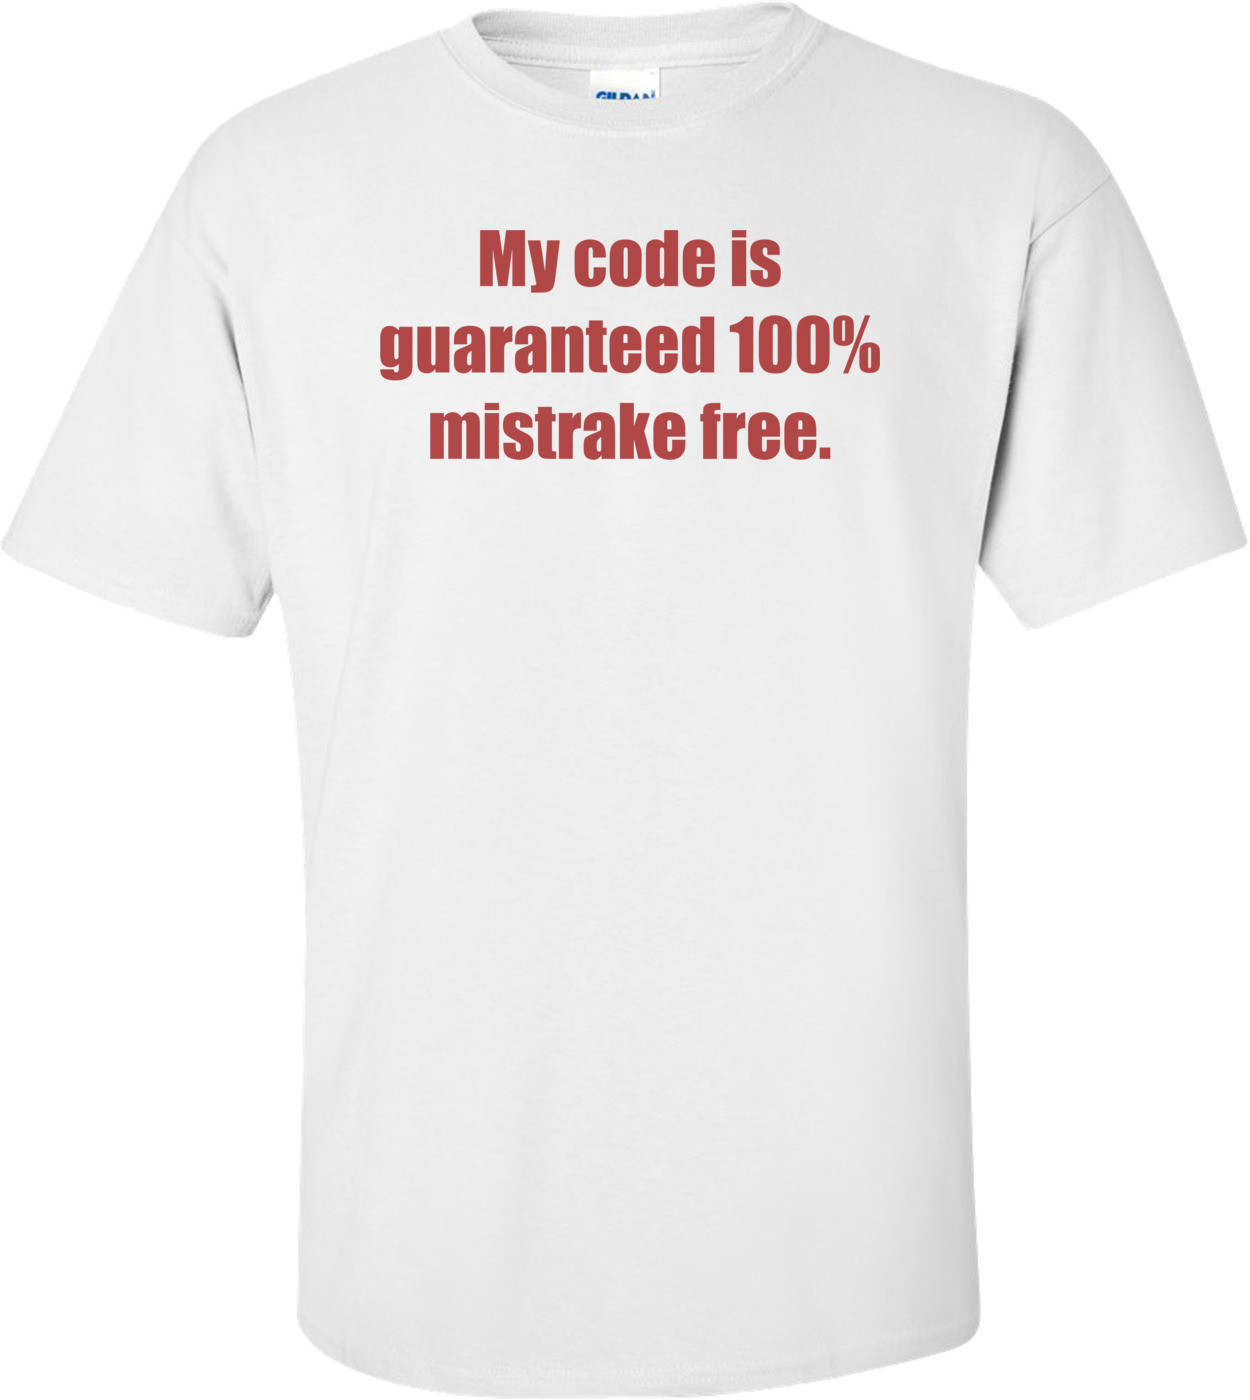 My code is guaranteed 100% mistrake free.